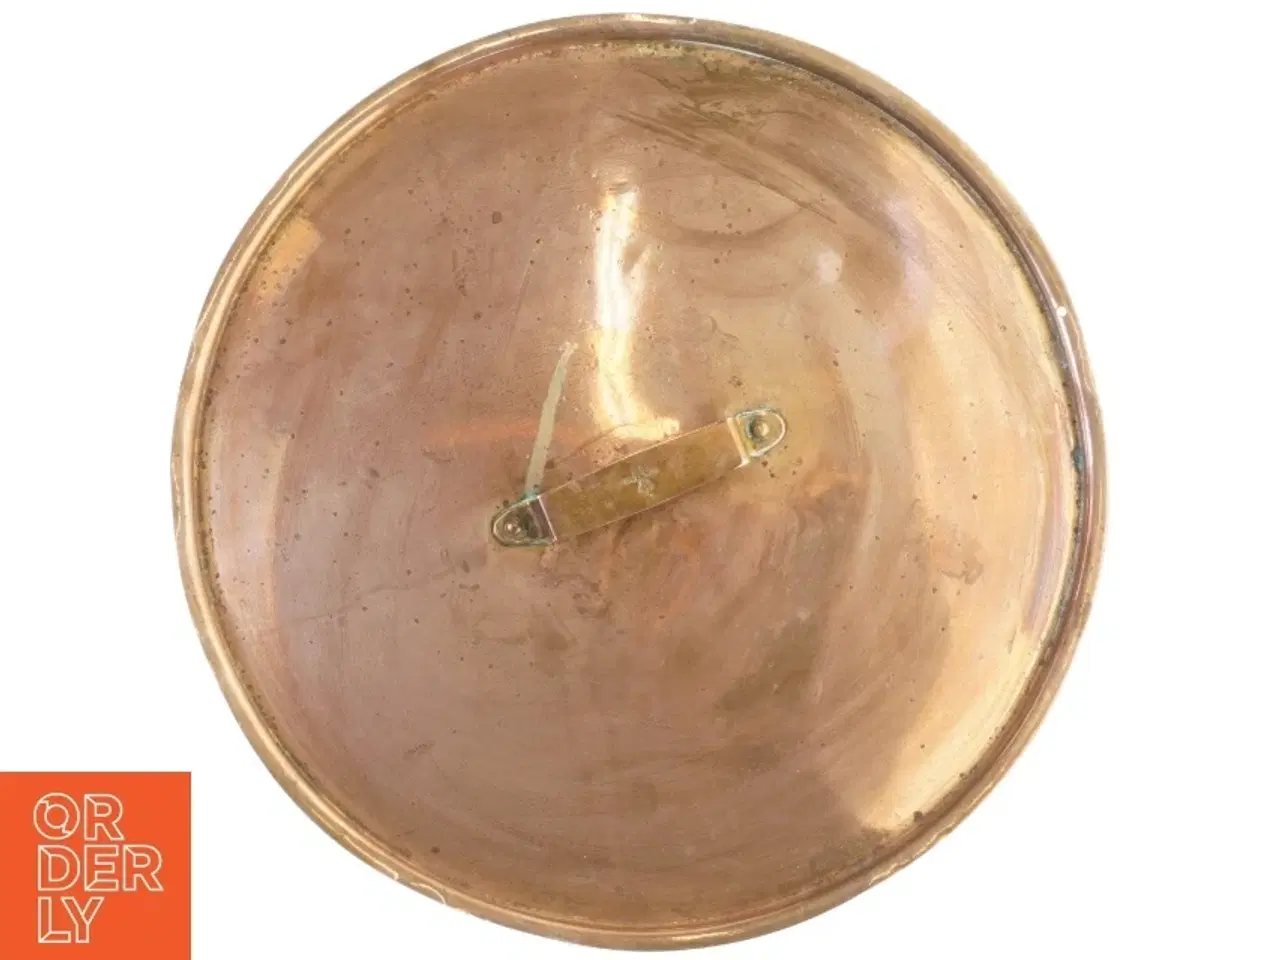 Billede 2 - Låg i kobber, diameter 31 cm